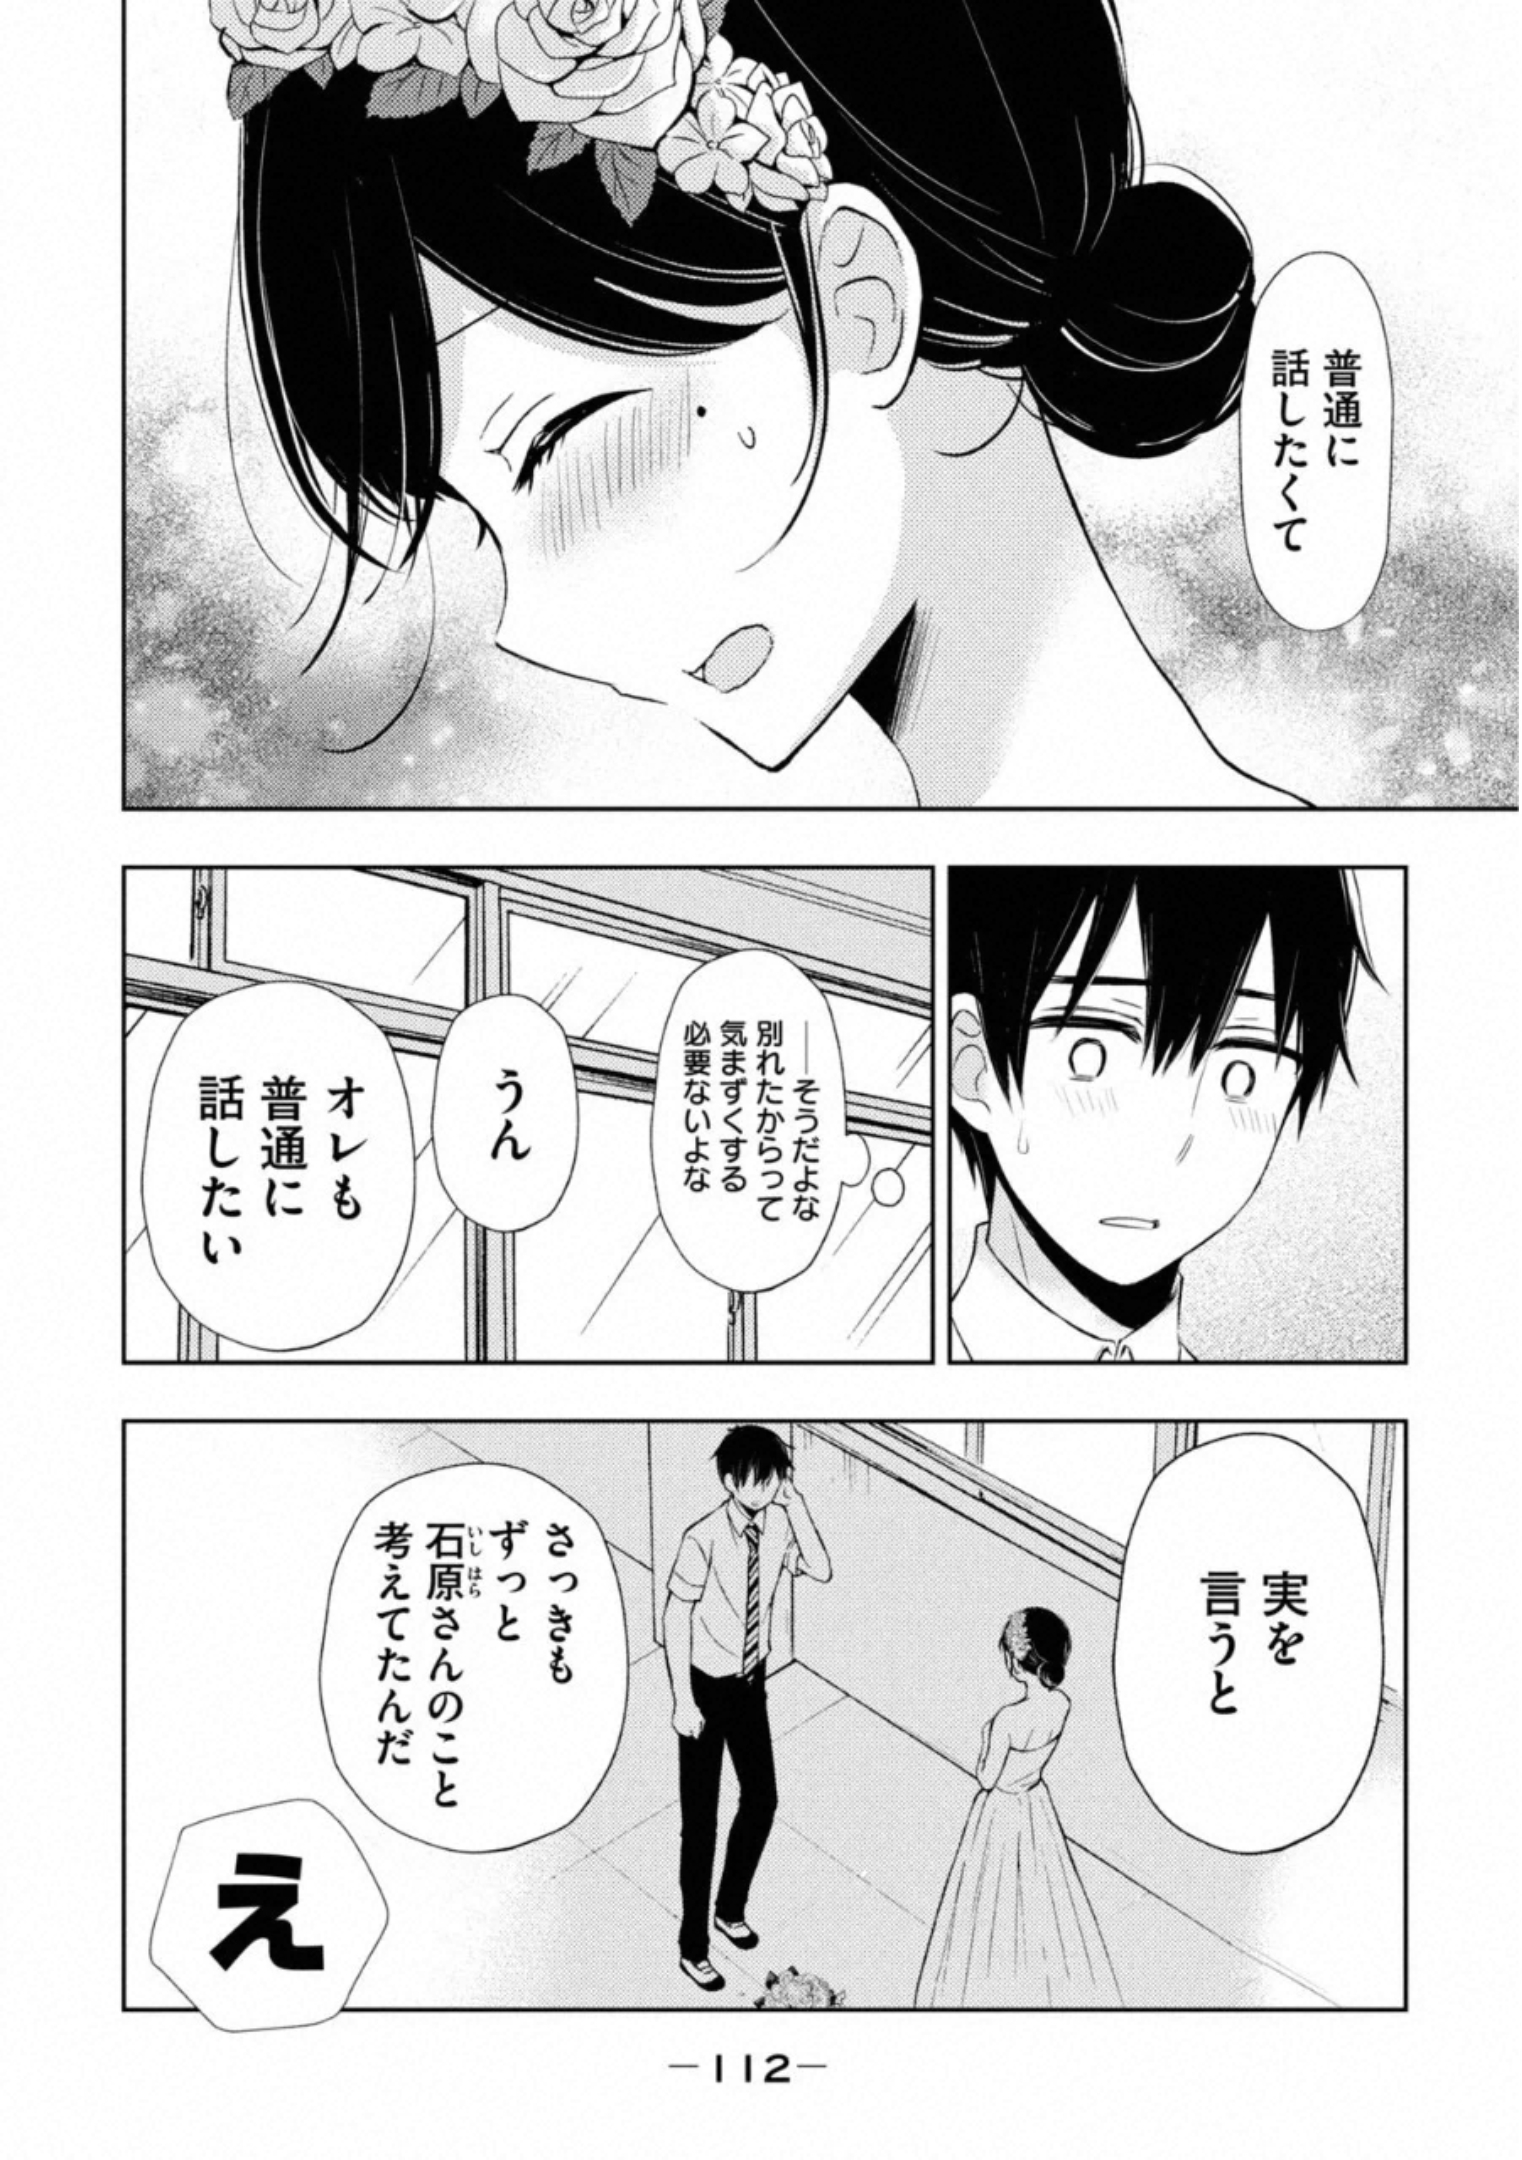 Watari-kun no xx ga Houkai Sunzen - Chapter 56 - Page 4